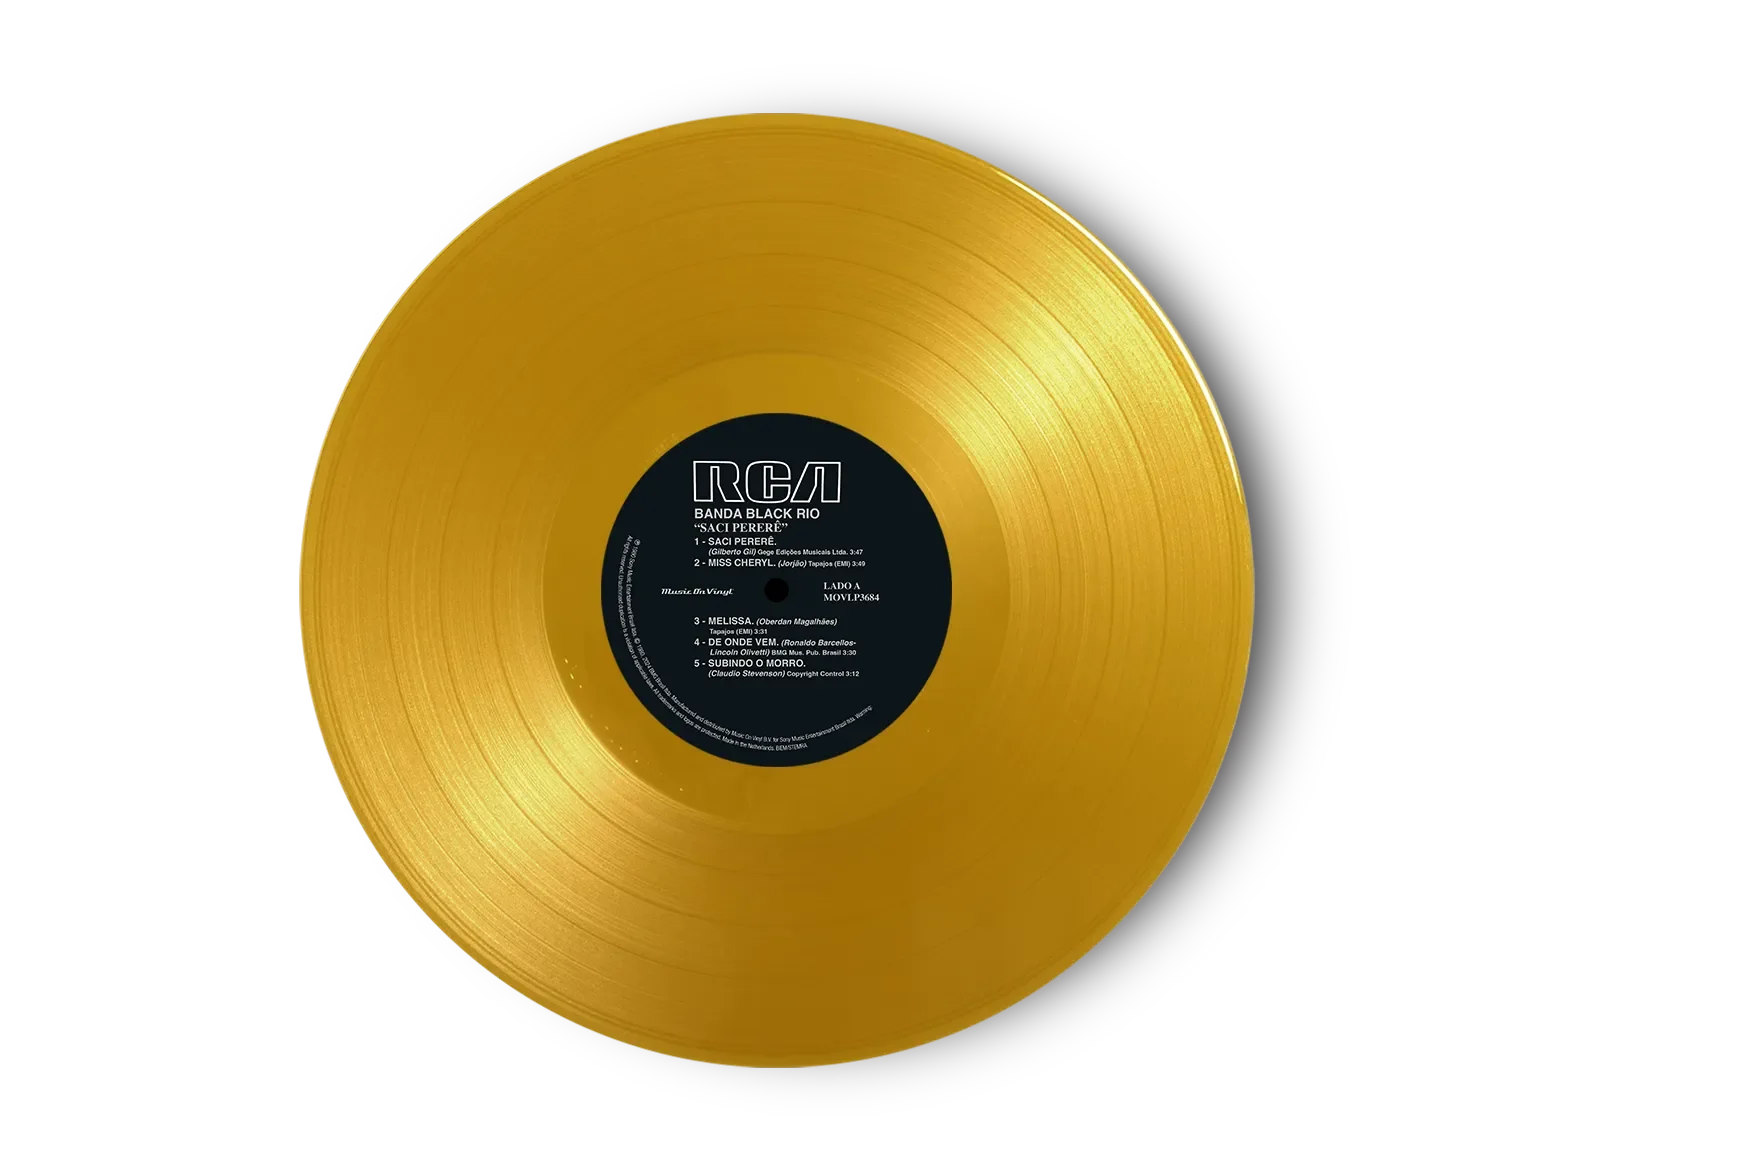 BANDA BLACK RIO - Saci Pererê (2024 Reissue) - LP - 180g Yellow Vinyl [JUN 7]